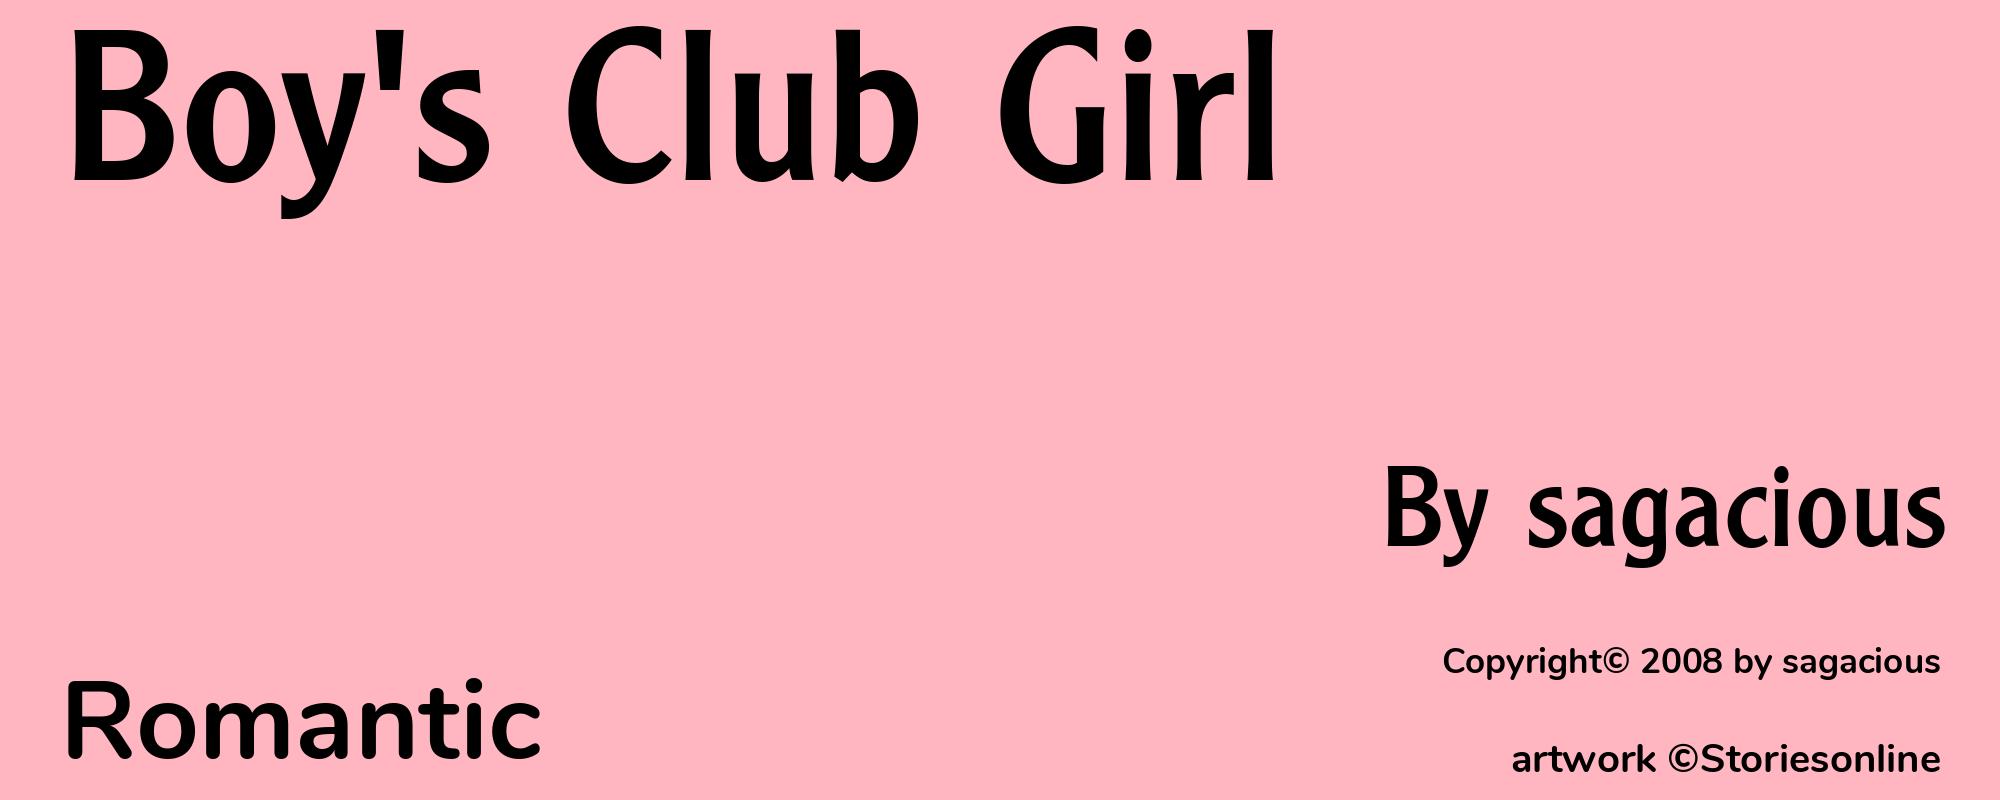 Boy's Club Girl - Cover